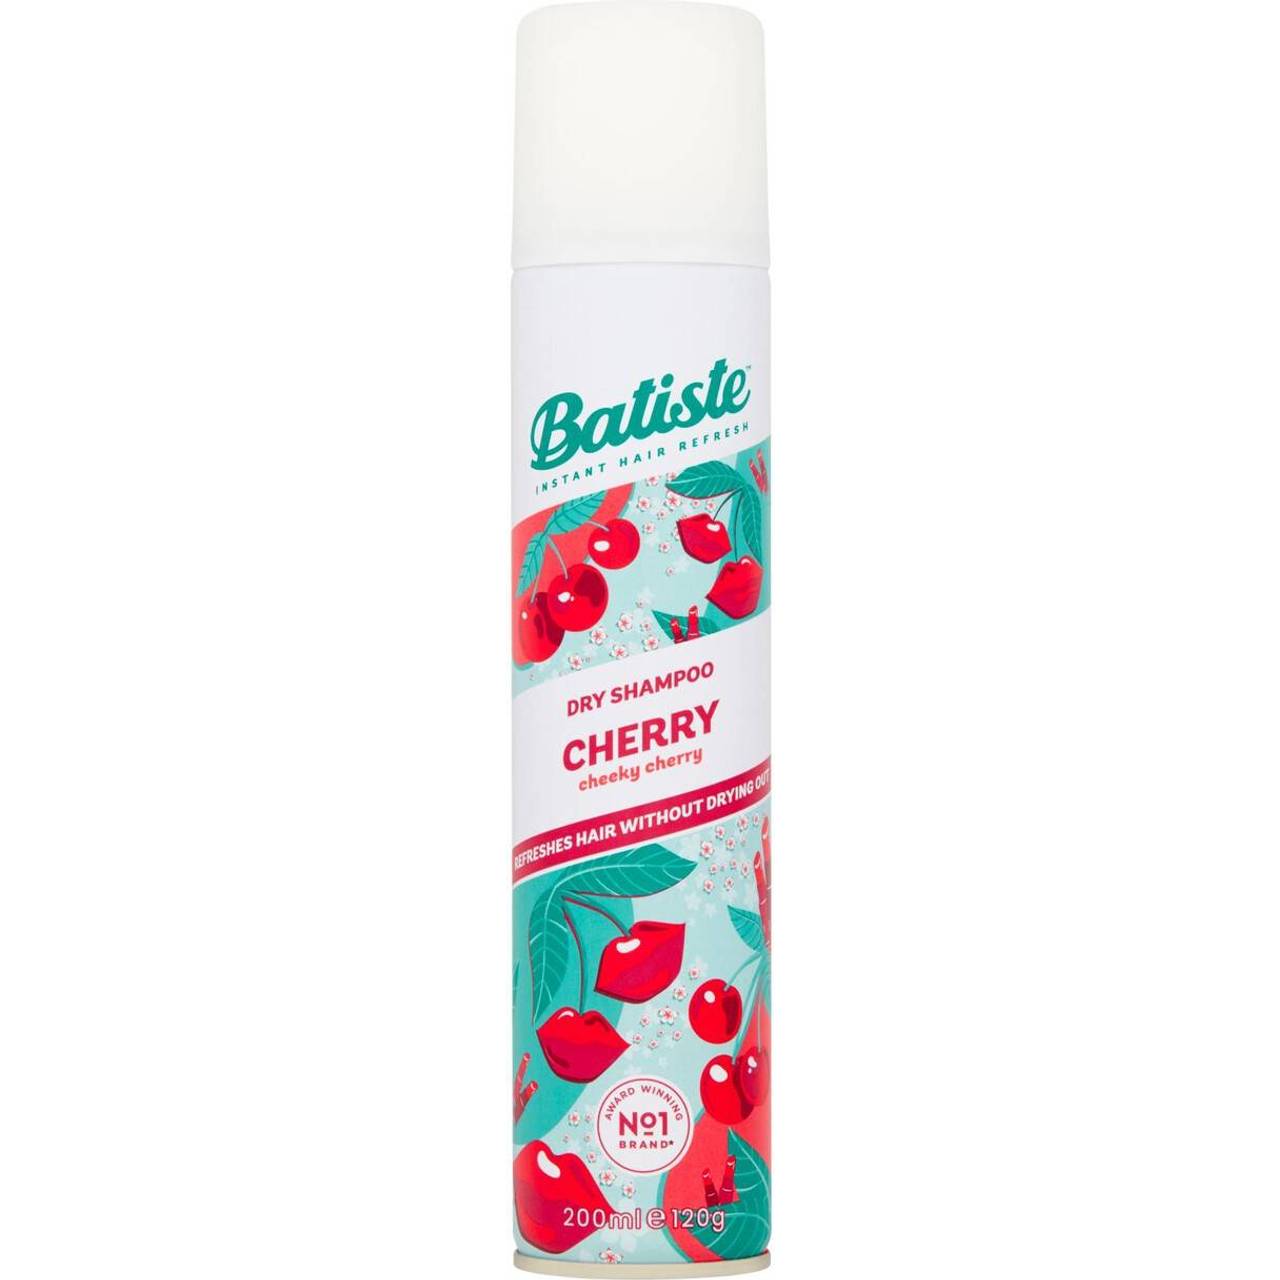 Batiste Dry Shampoo Cherry 200ml • See best price